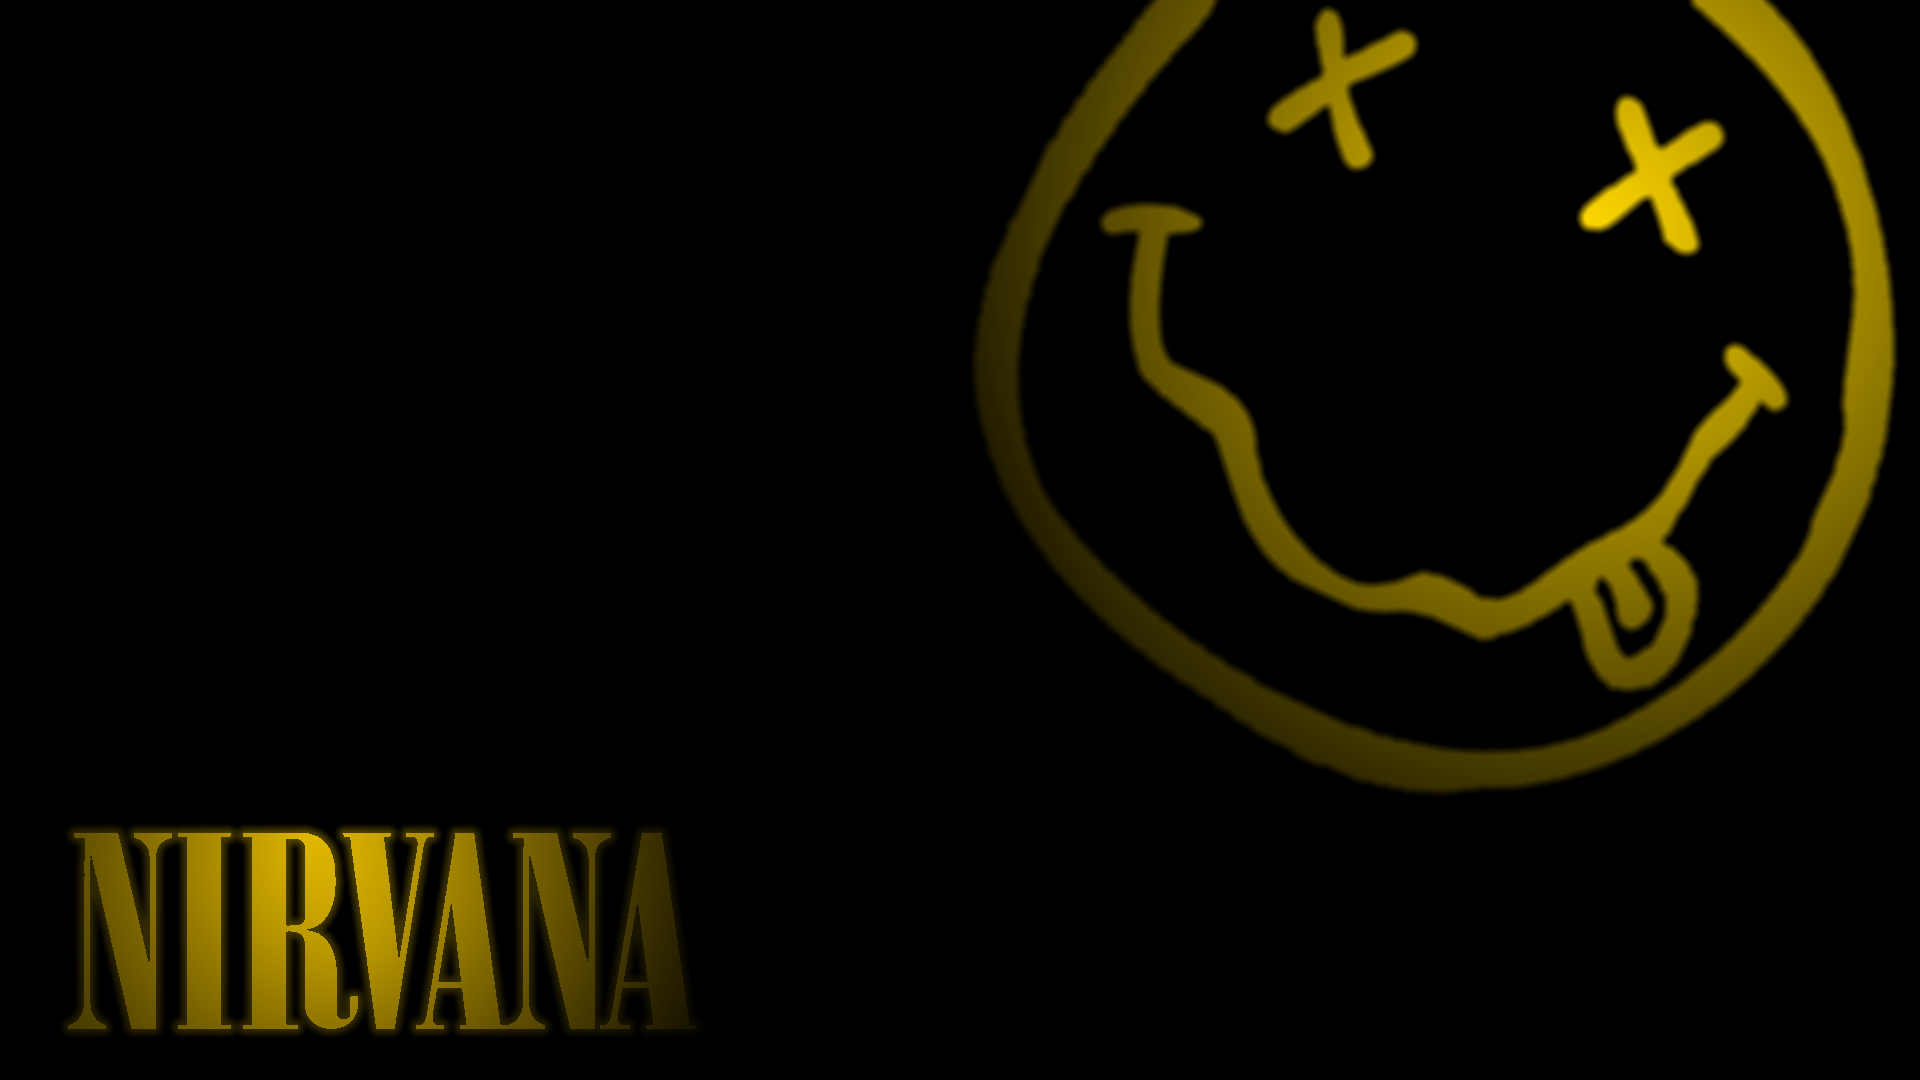 Nirvana Logo Wallpaperwallpaperafari.com